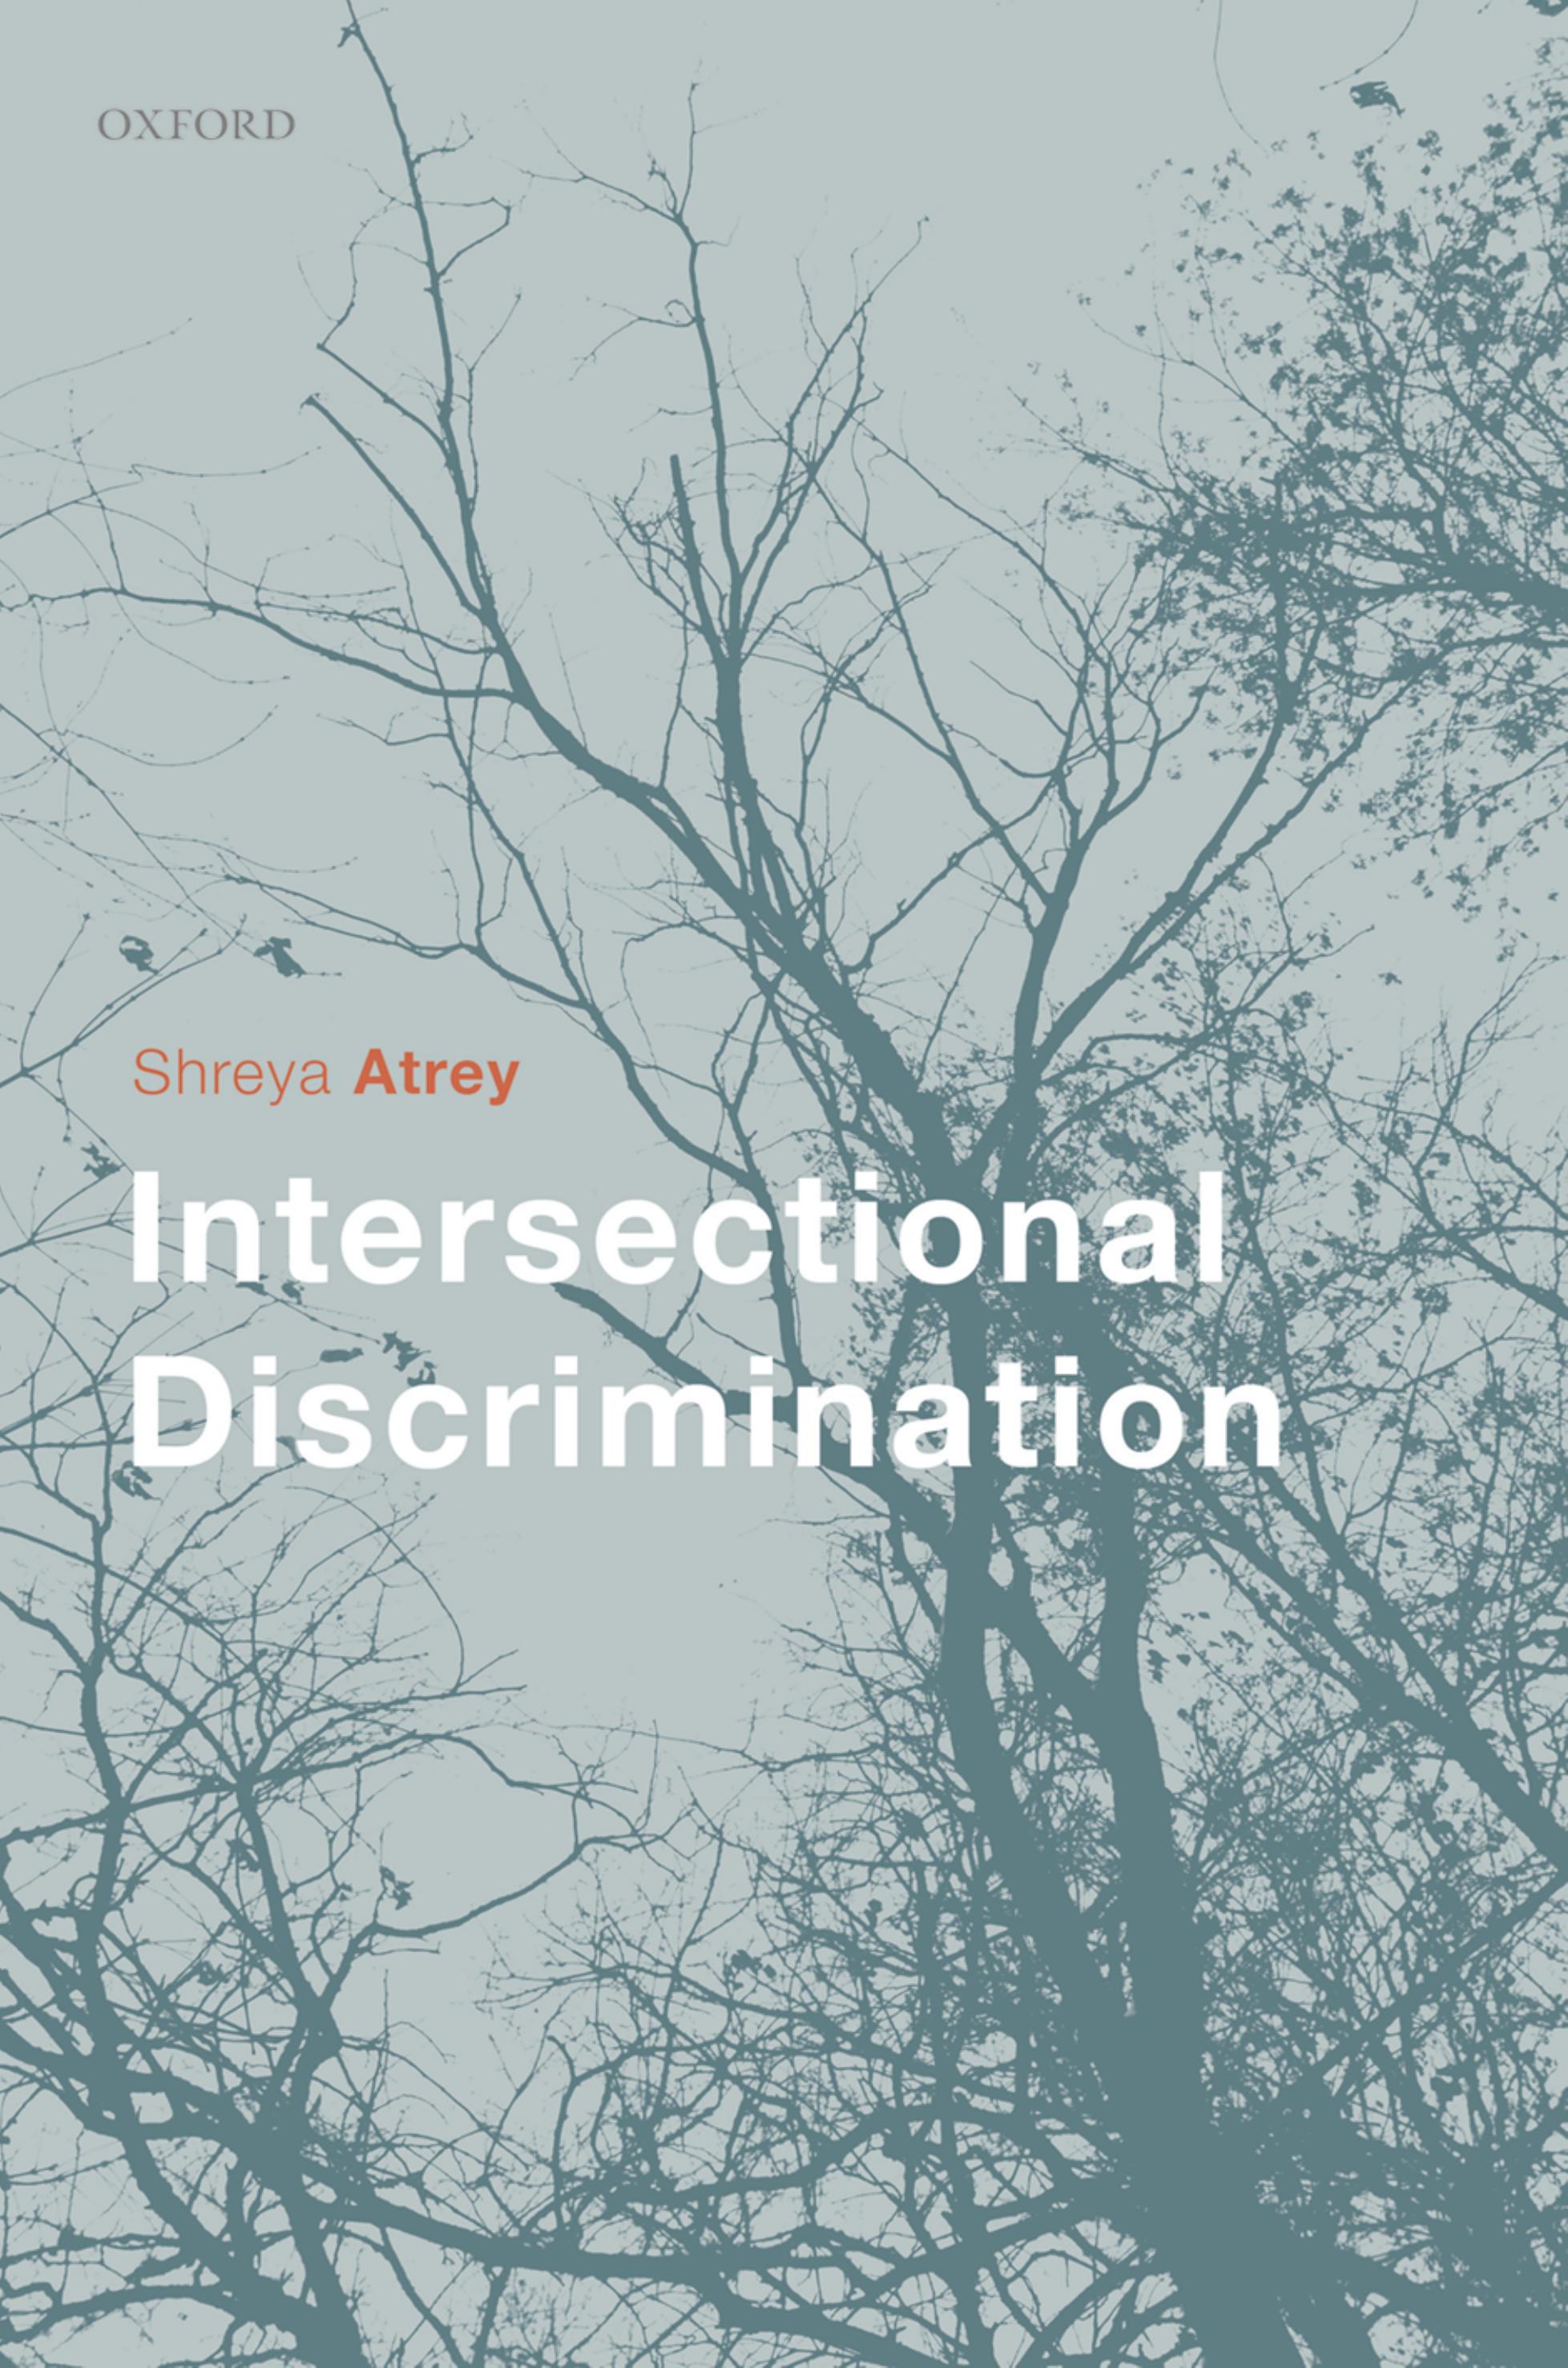 Intersectional Discrimination by Shreya Atrey